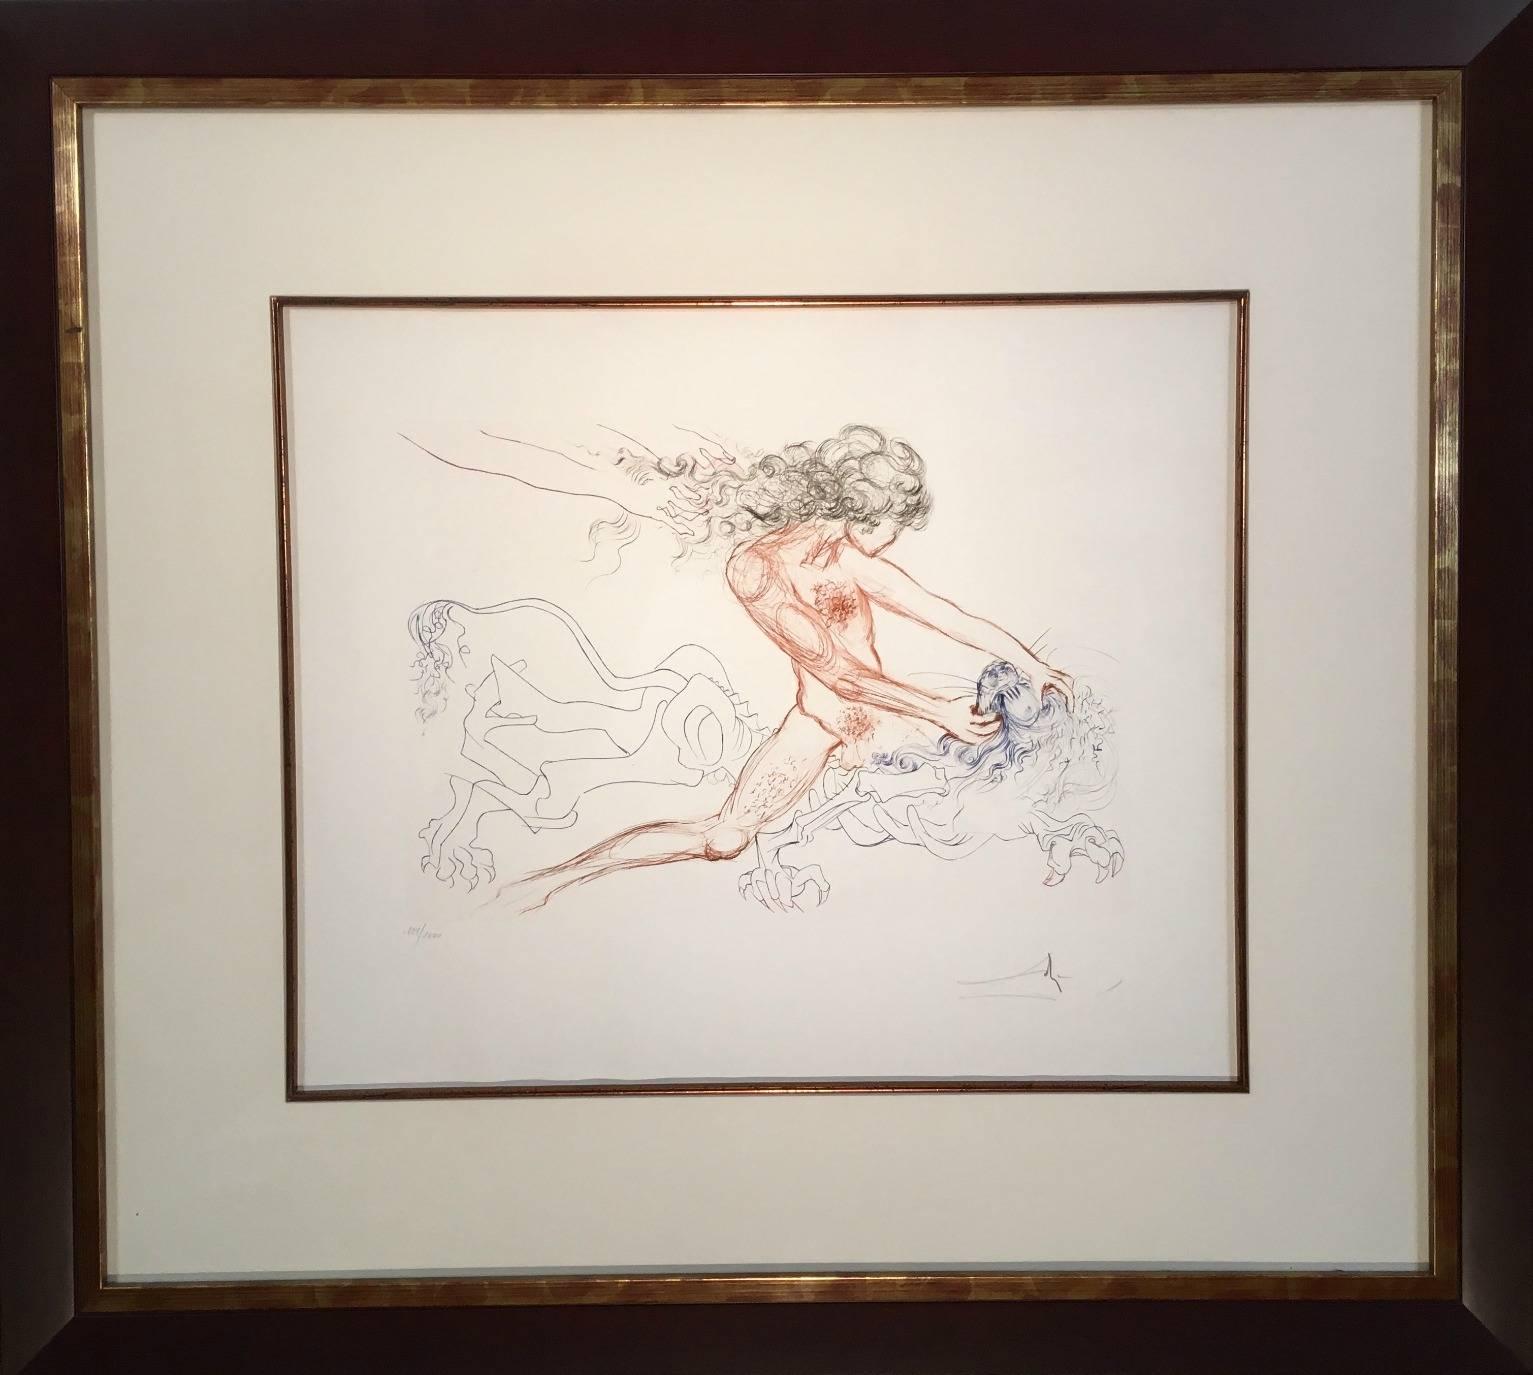 "Samson and Delilah" - Print by Salvador Dalí